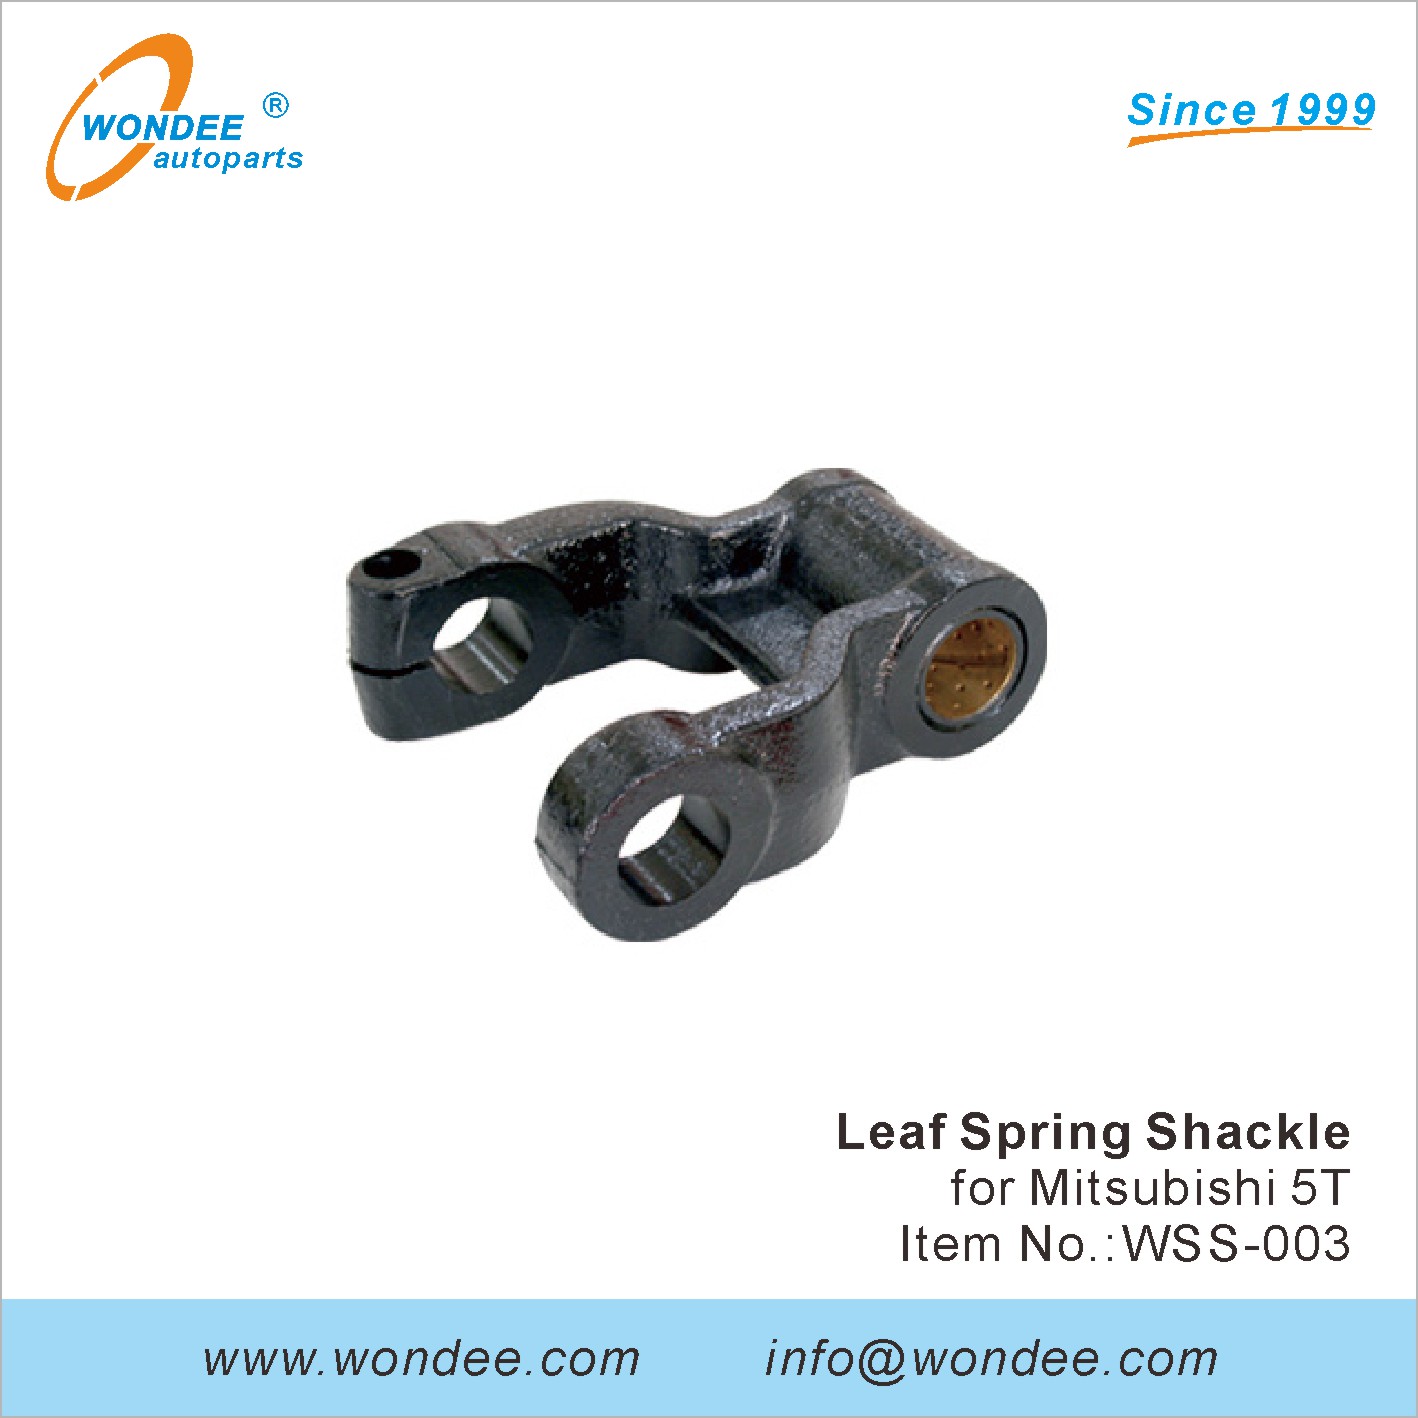 WONDEE leaf spring shackle (3)